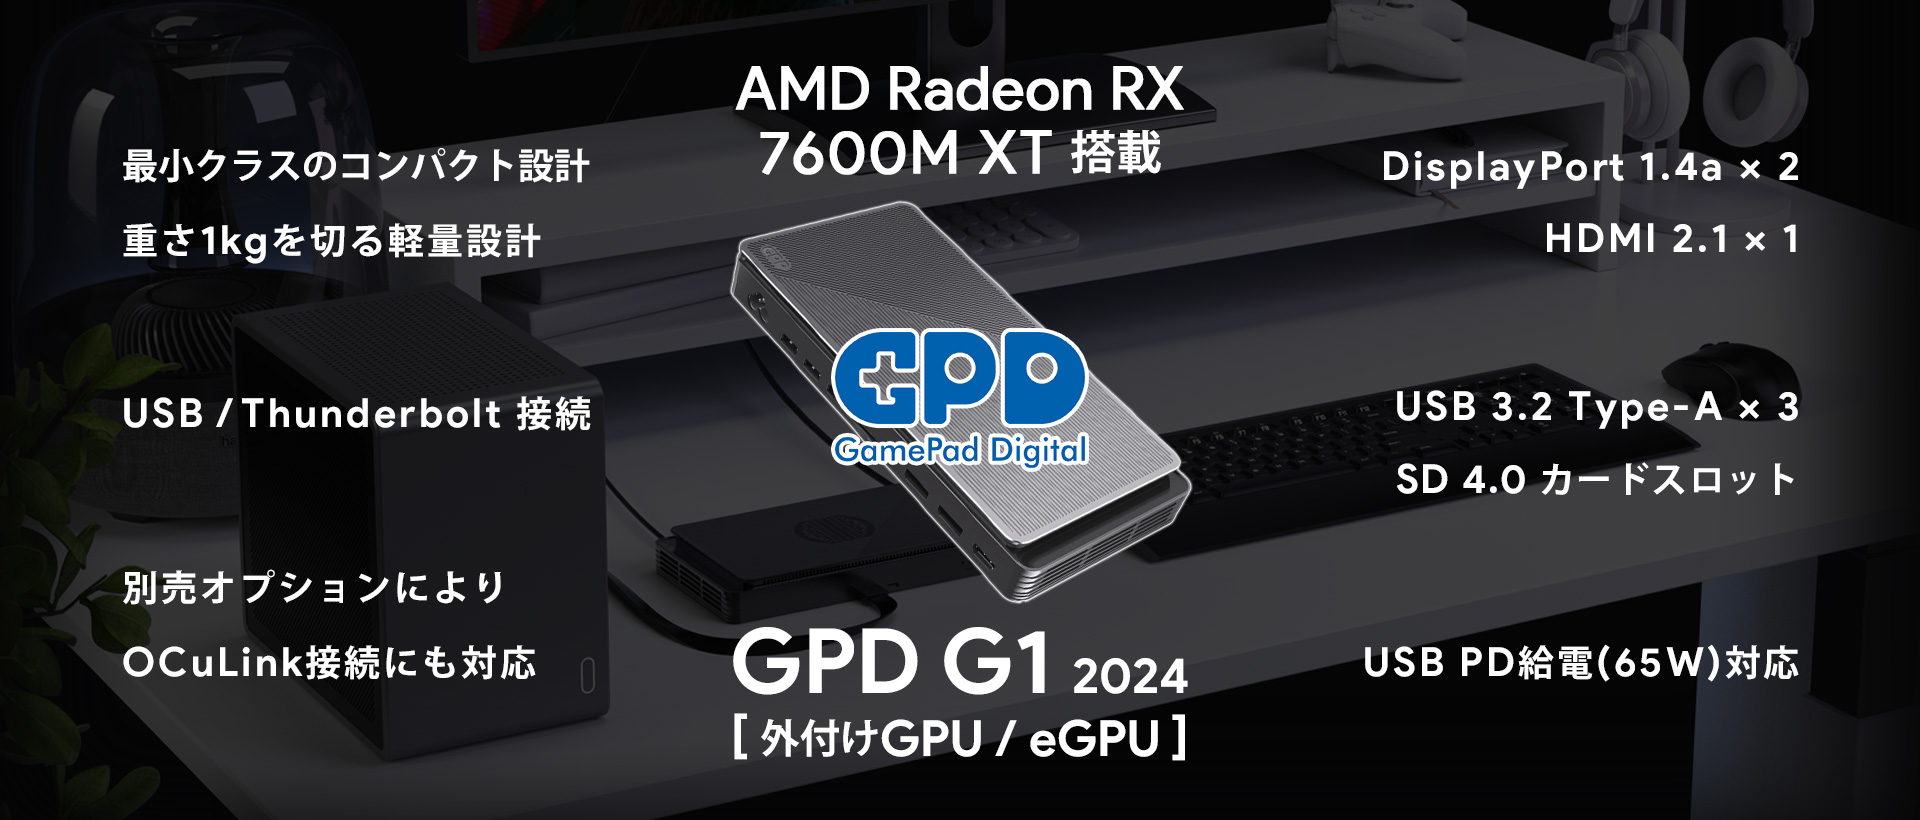 AMD Radeon RX 7600M XT搭載 サイレントモードに対応した最小クラスのeGPU「GPD G1 2024」